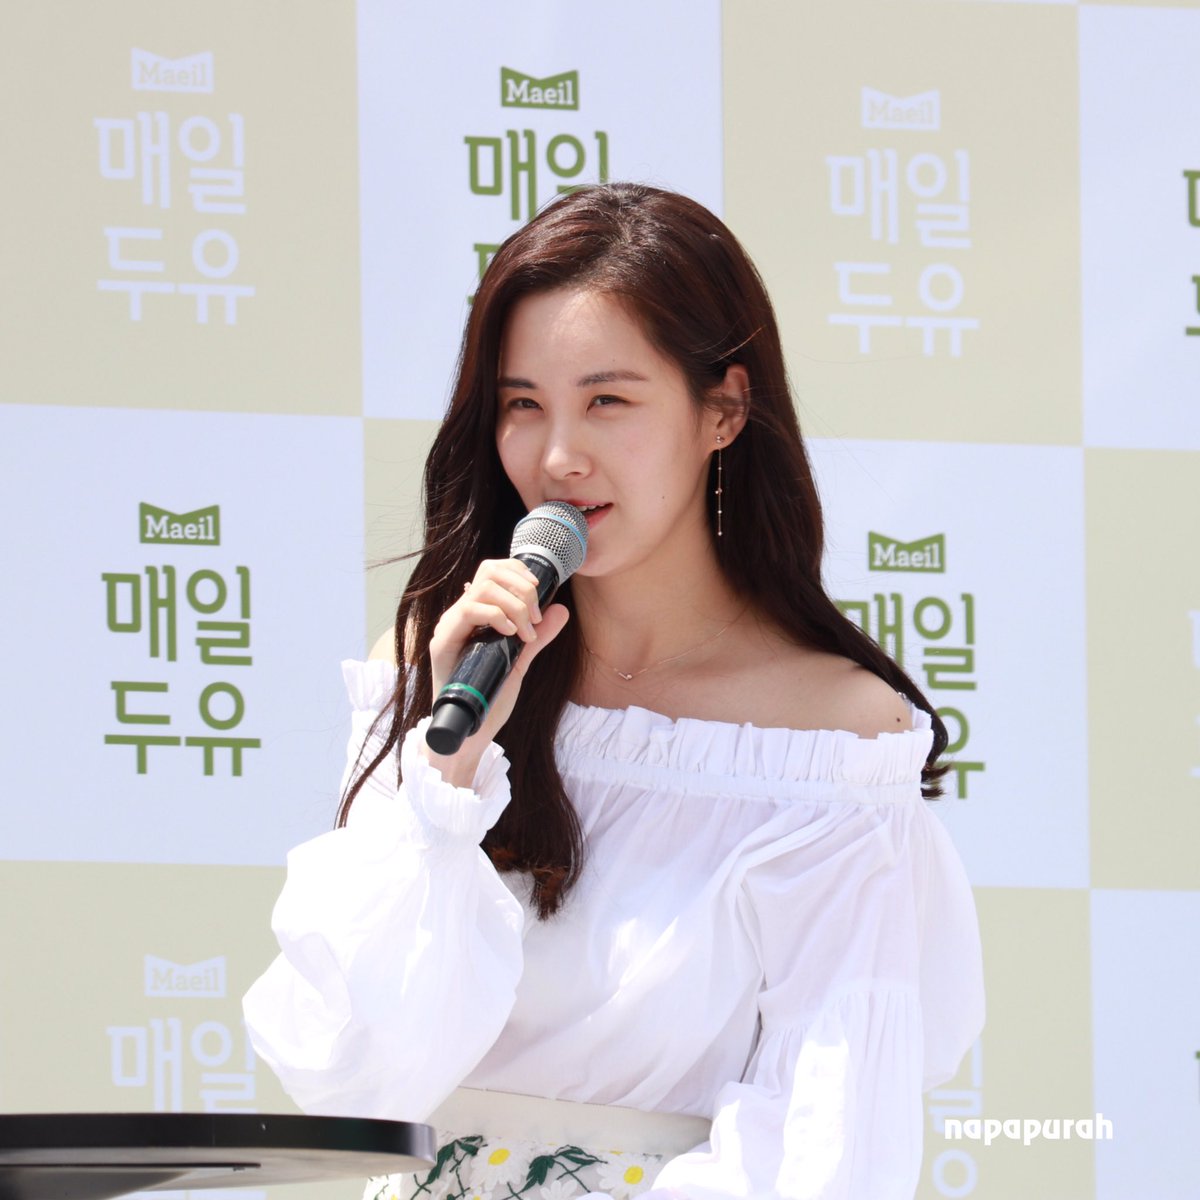  [PIC][03-06-2017]SeoHyun tham dự sự kiện “City Forestival - Maeil Duyou 'Confidence Diary'” vào chiều nay - Page 3 DBpDlFhVwAEVmMe